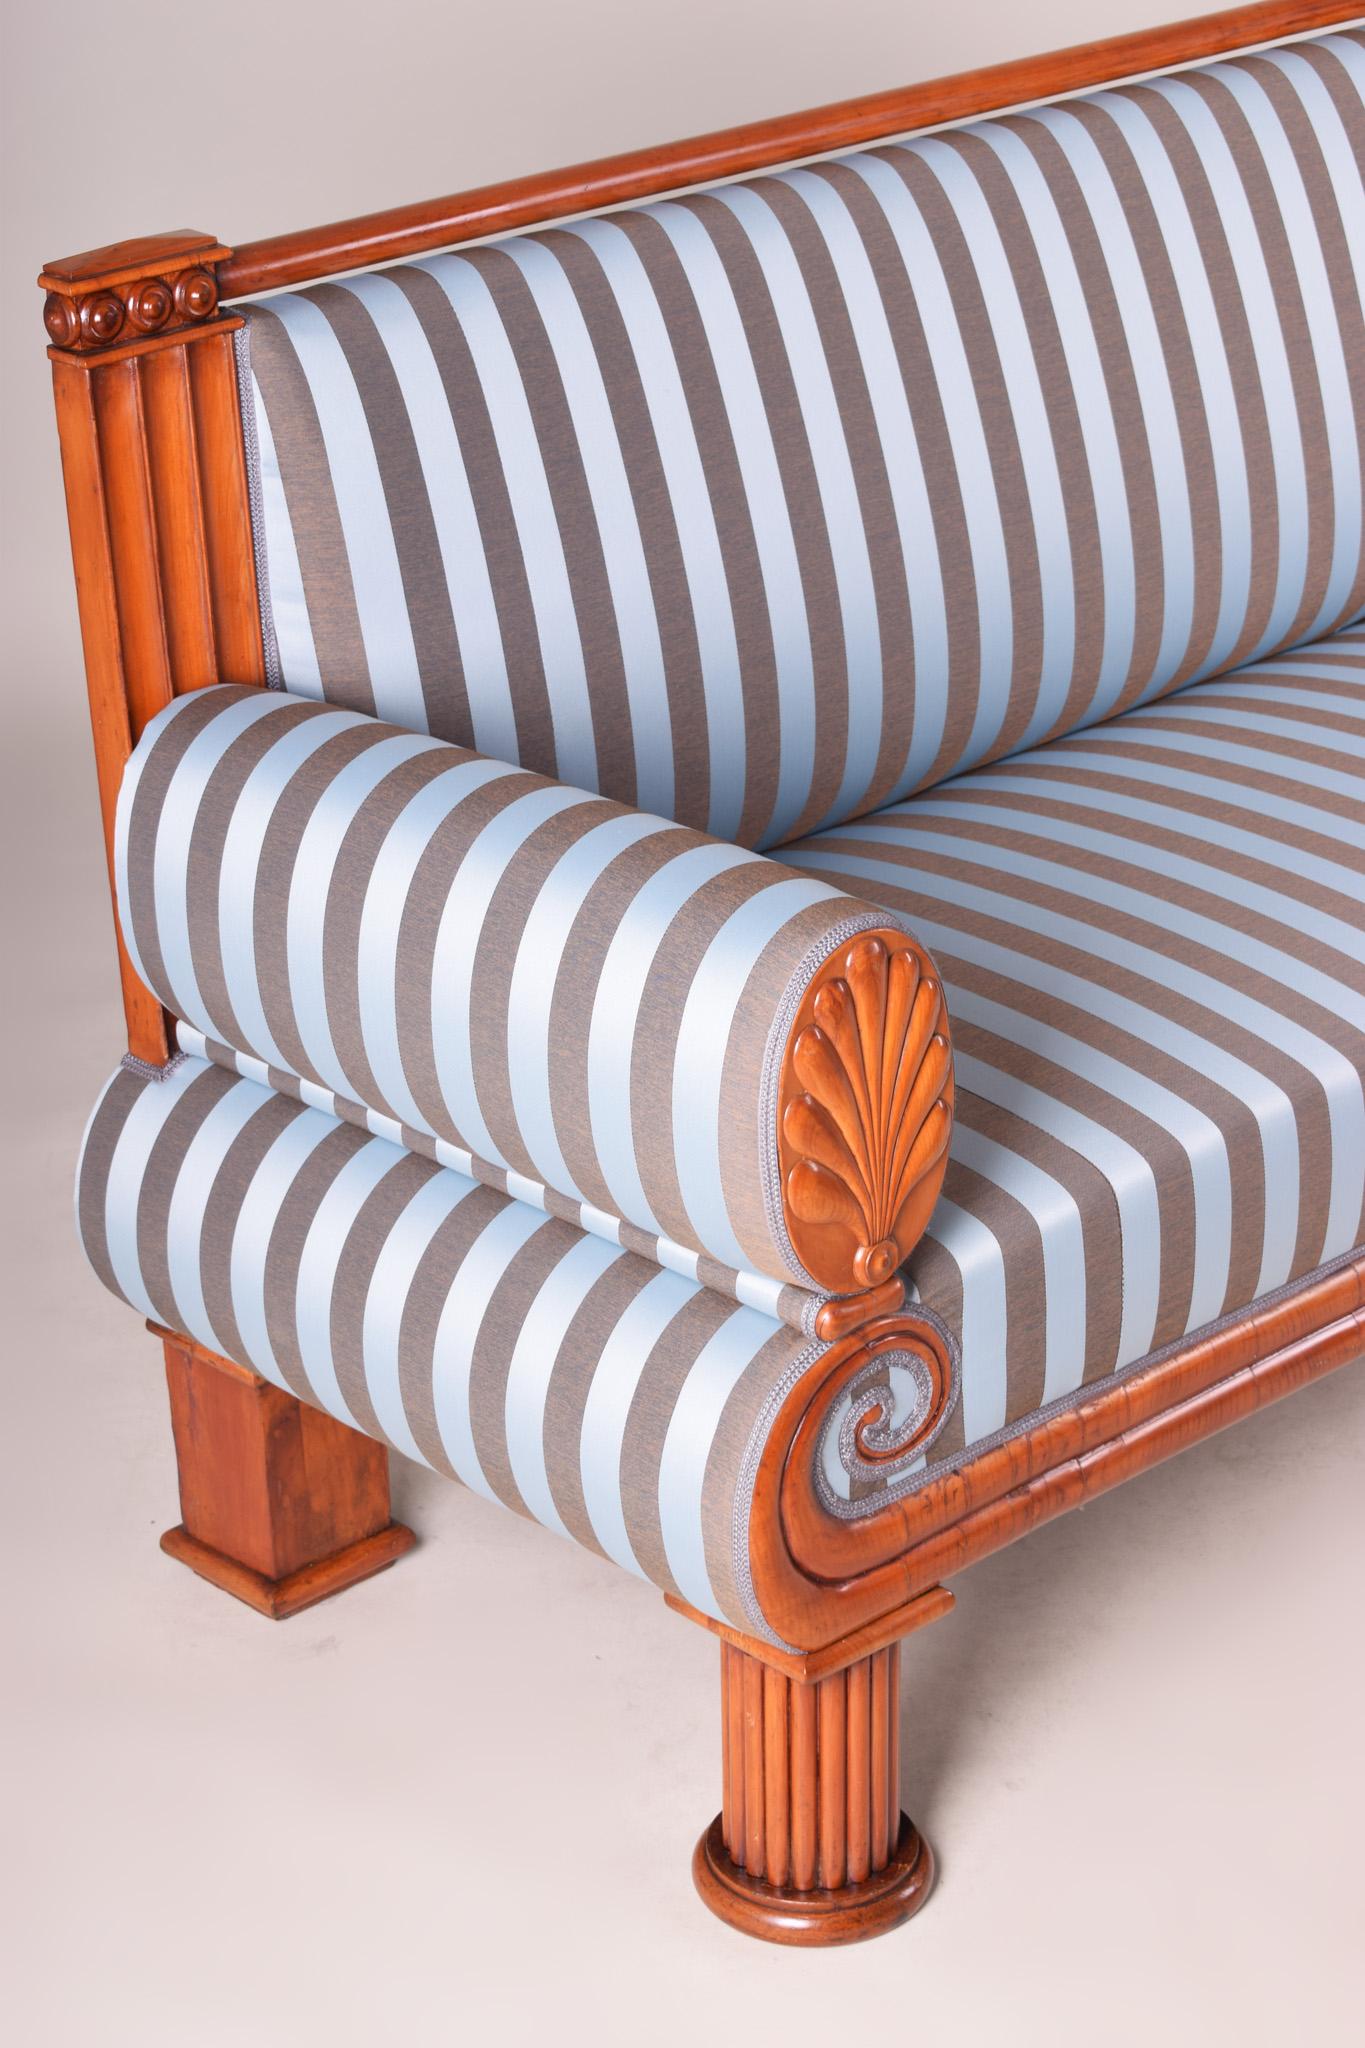 19th Century Biedermeier Sofa, Cherrywood, 1820s, Made in Czechia, Restored For Sale 1